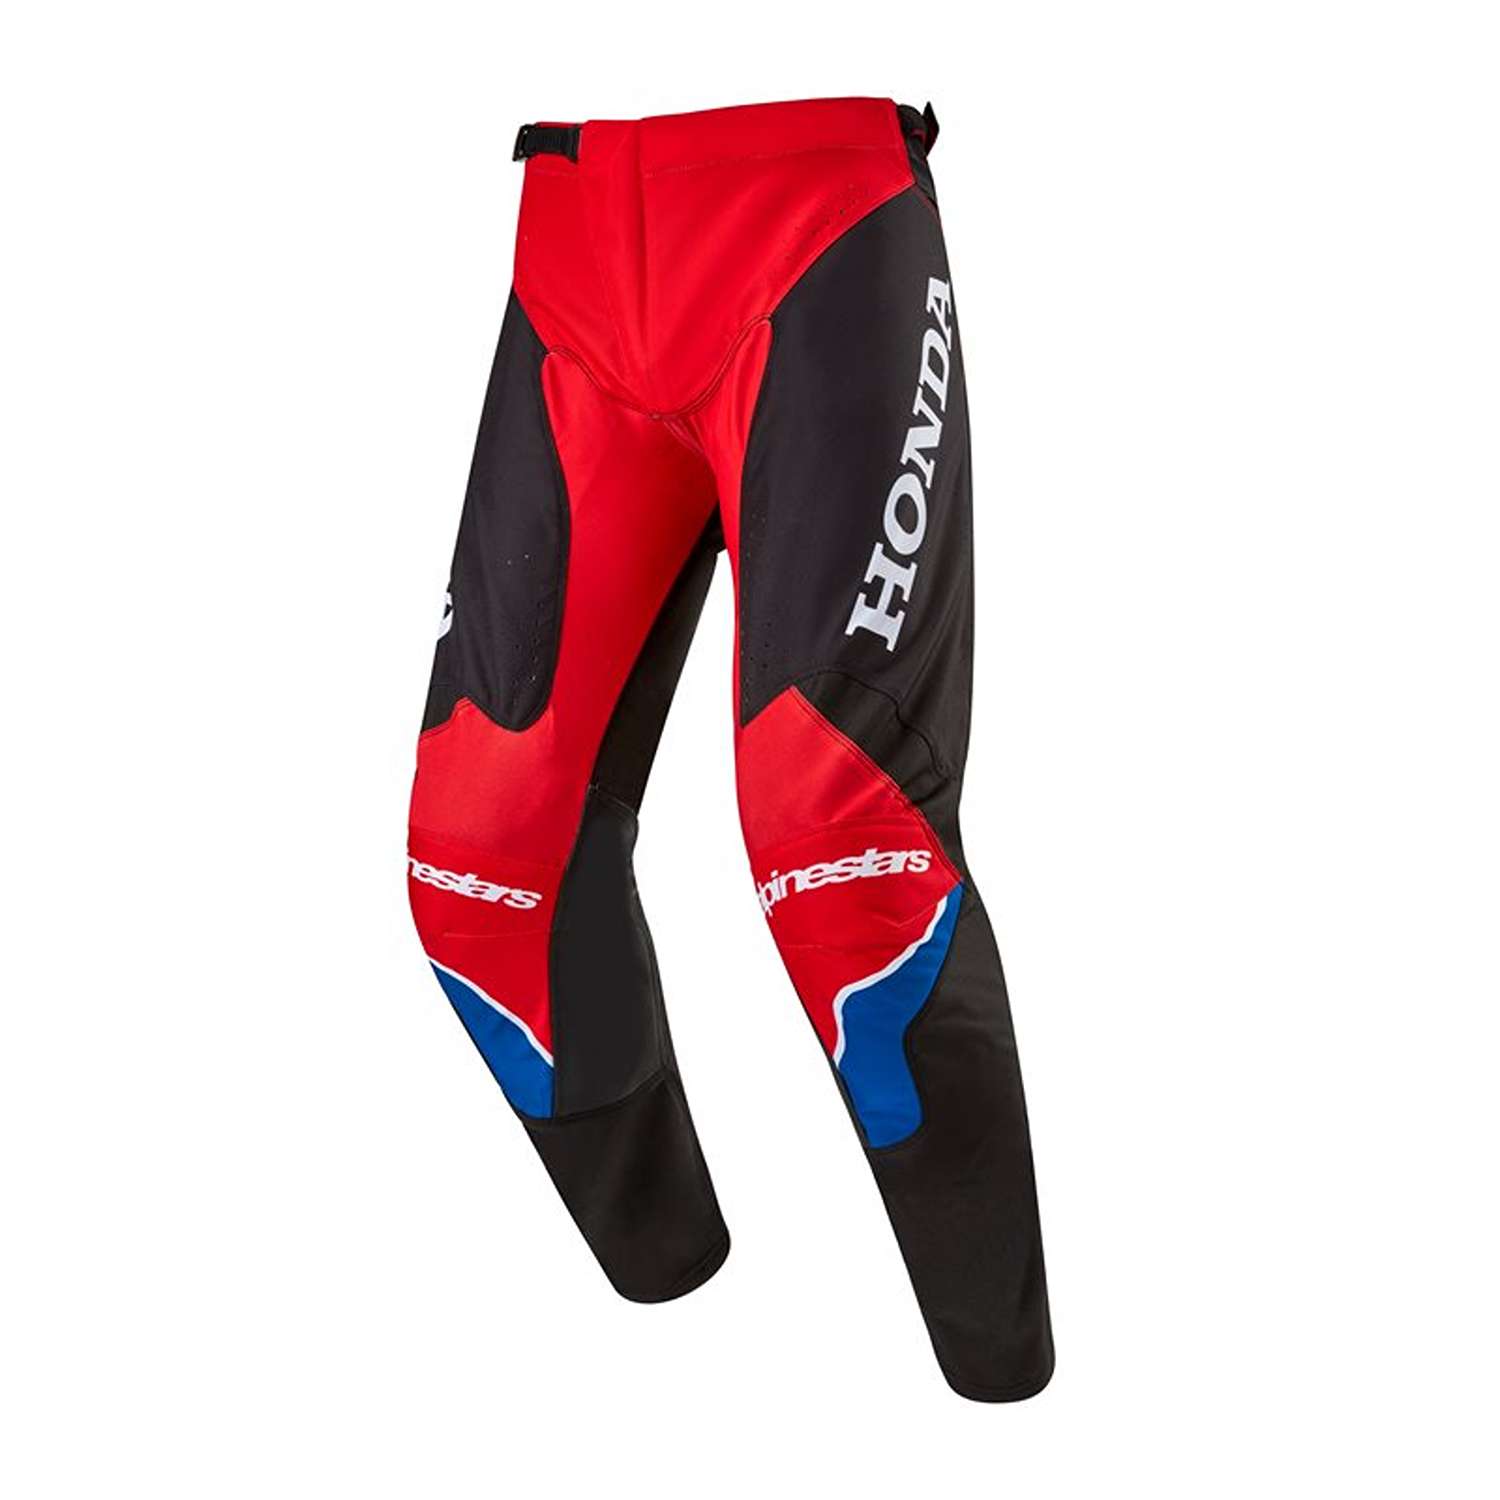 Image of Alpinestars Honda Racer Iconic Pants Bright Red Black White Size 32 ID 8059347169712